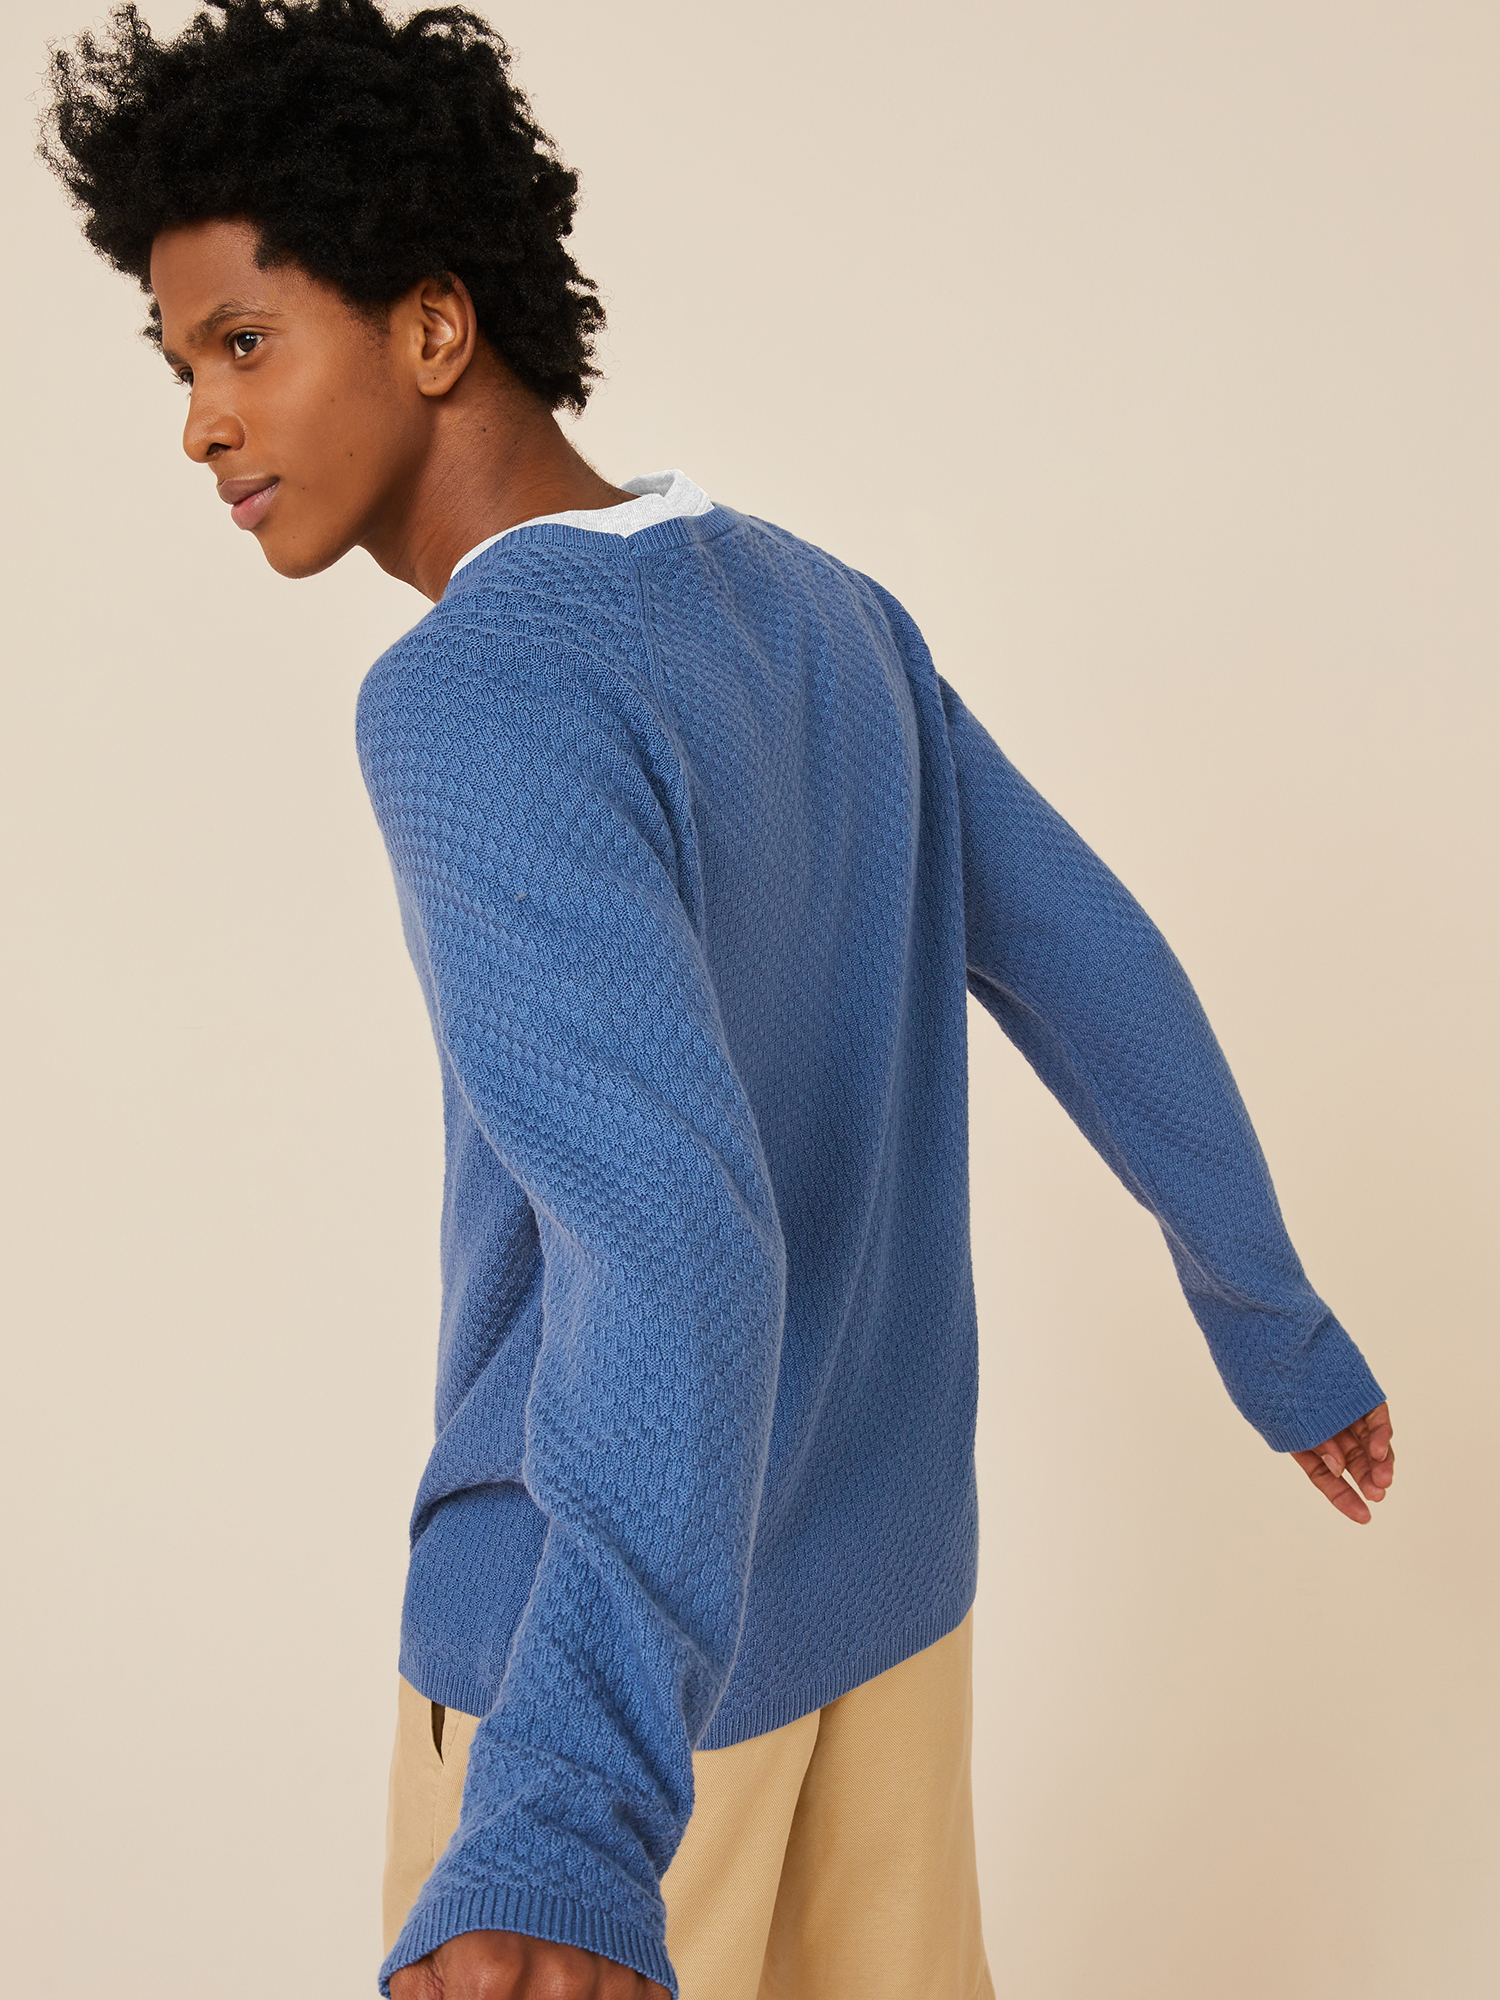 Free Assembly Men's Raglan Sweater - image 3 of 5